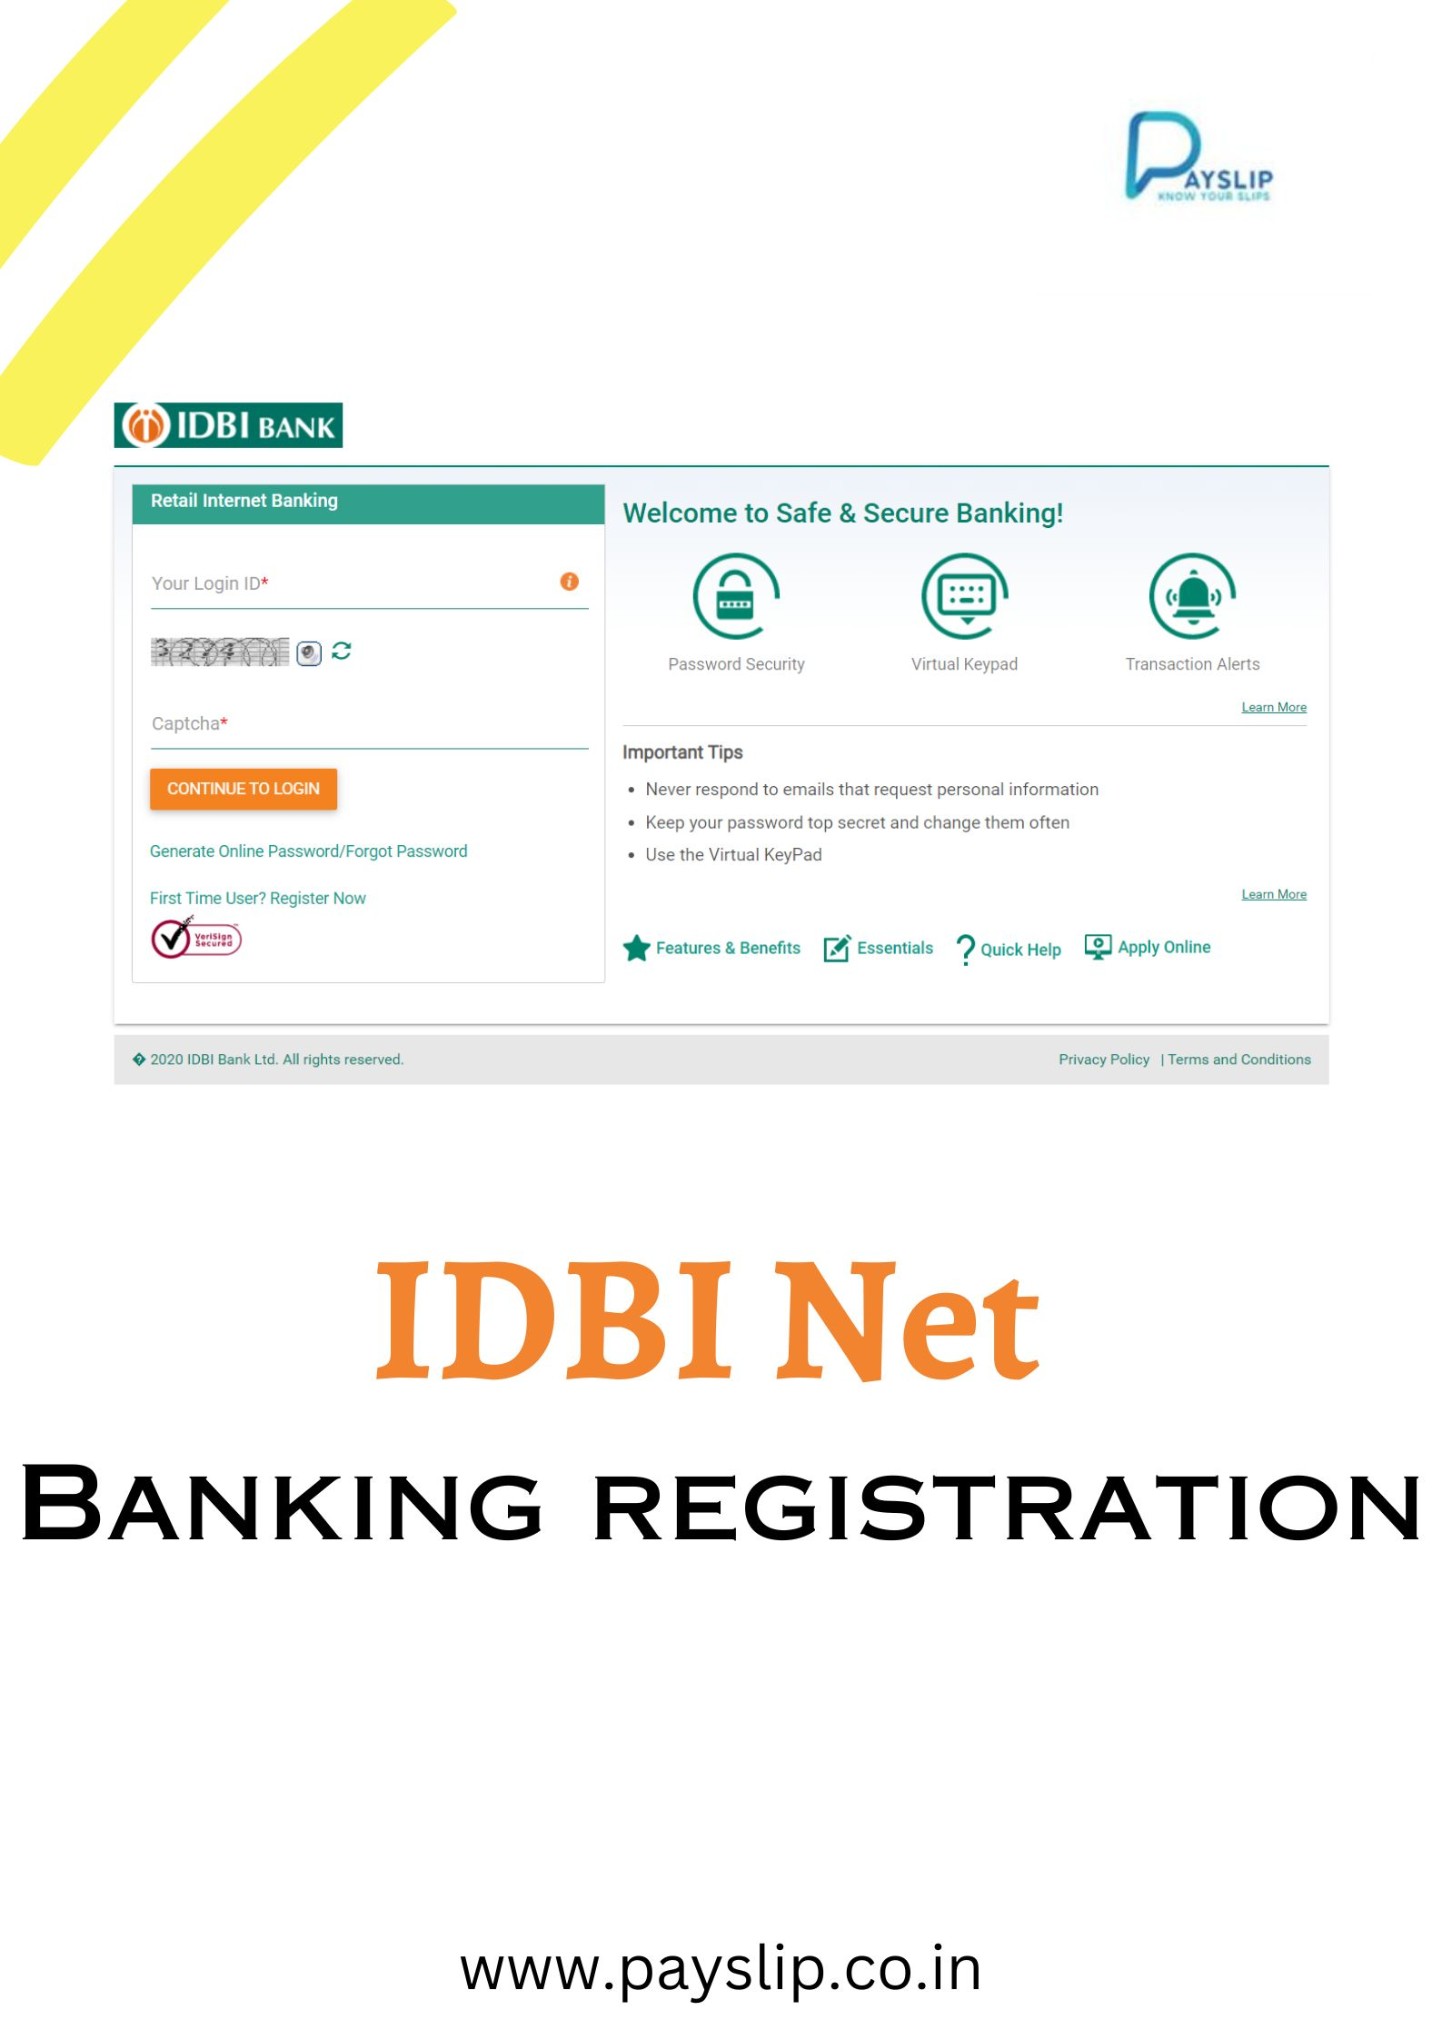 IDBI Net Banking registration